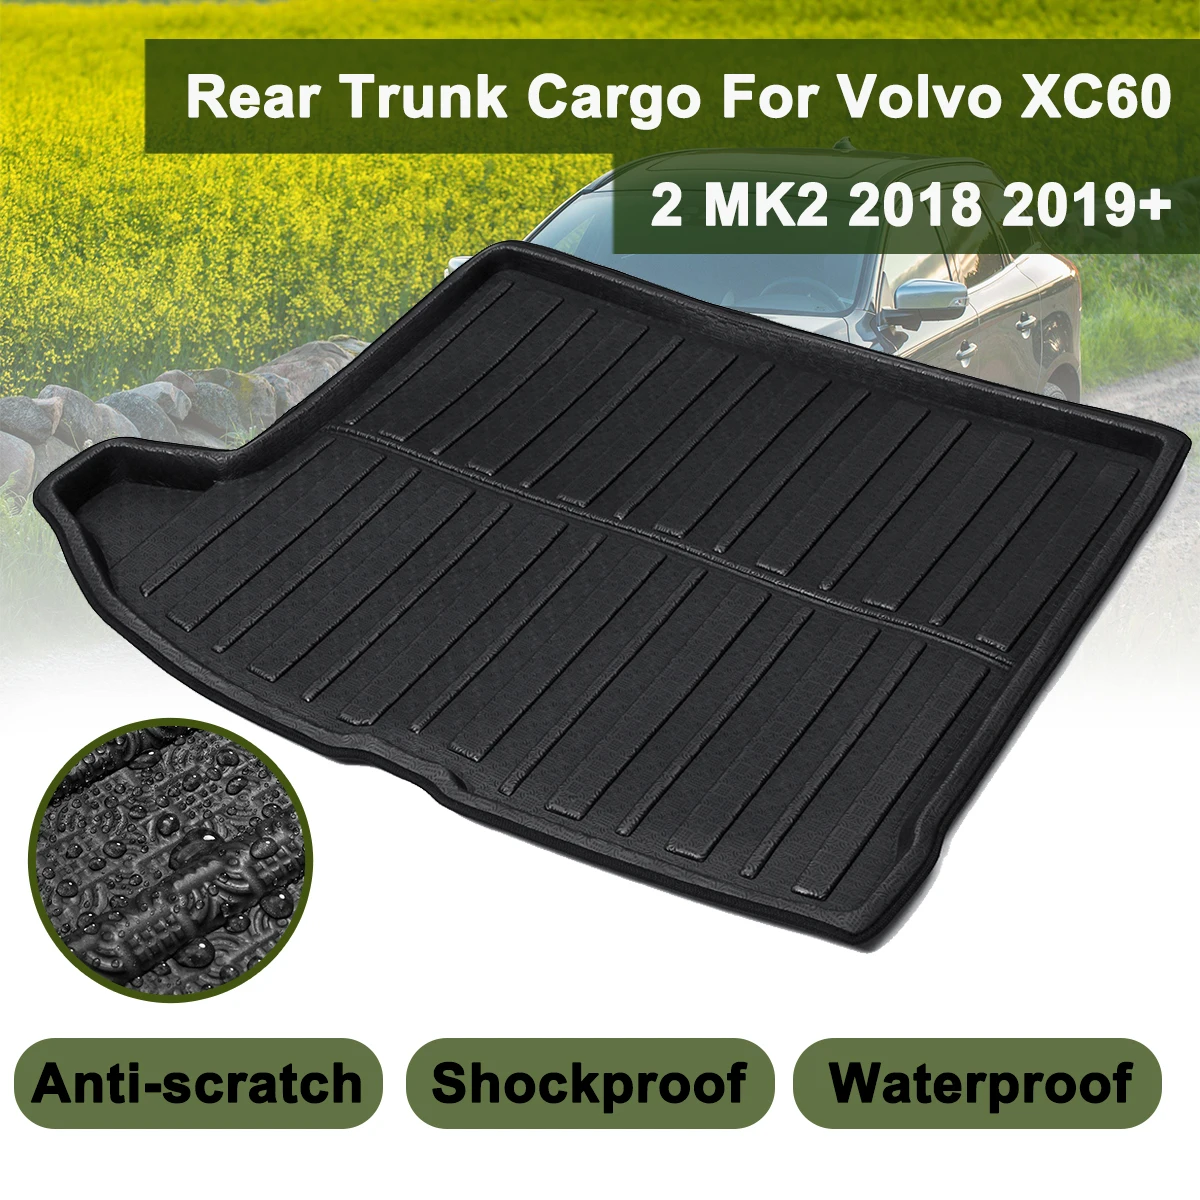 

Для Volvo XC60 2 MK2 2018 2019 + загрузочный грузовой лайнер задний багажник коврик для багажника пол ковер багажный лоток грязевая защита Водонепрони...